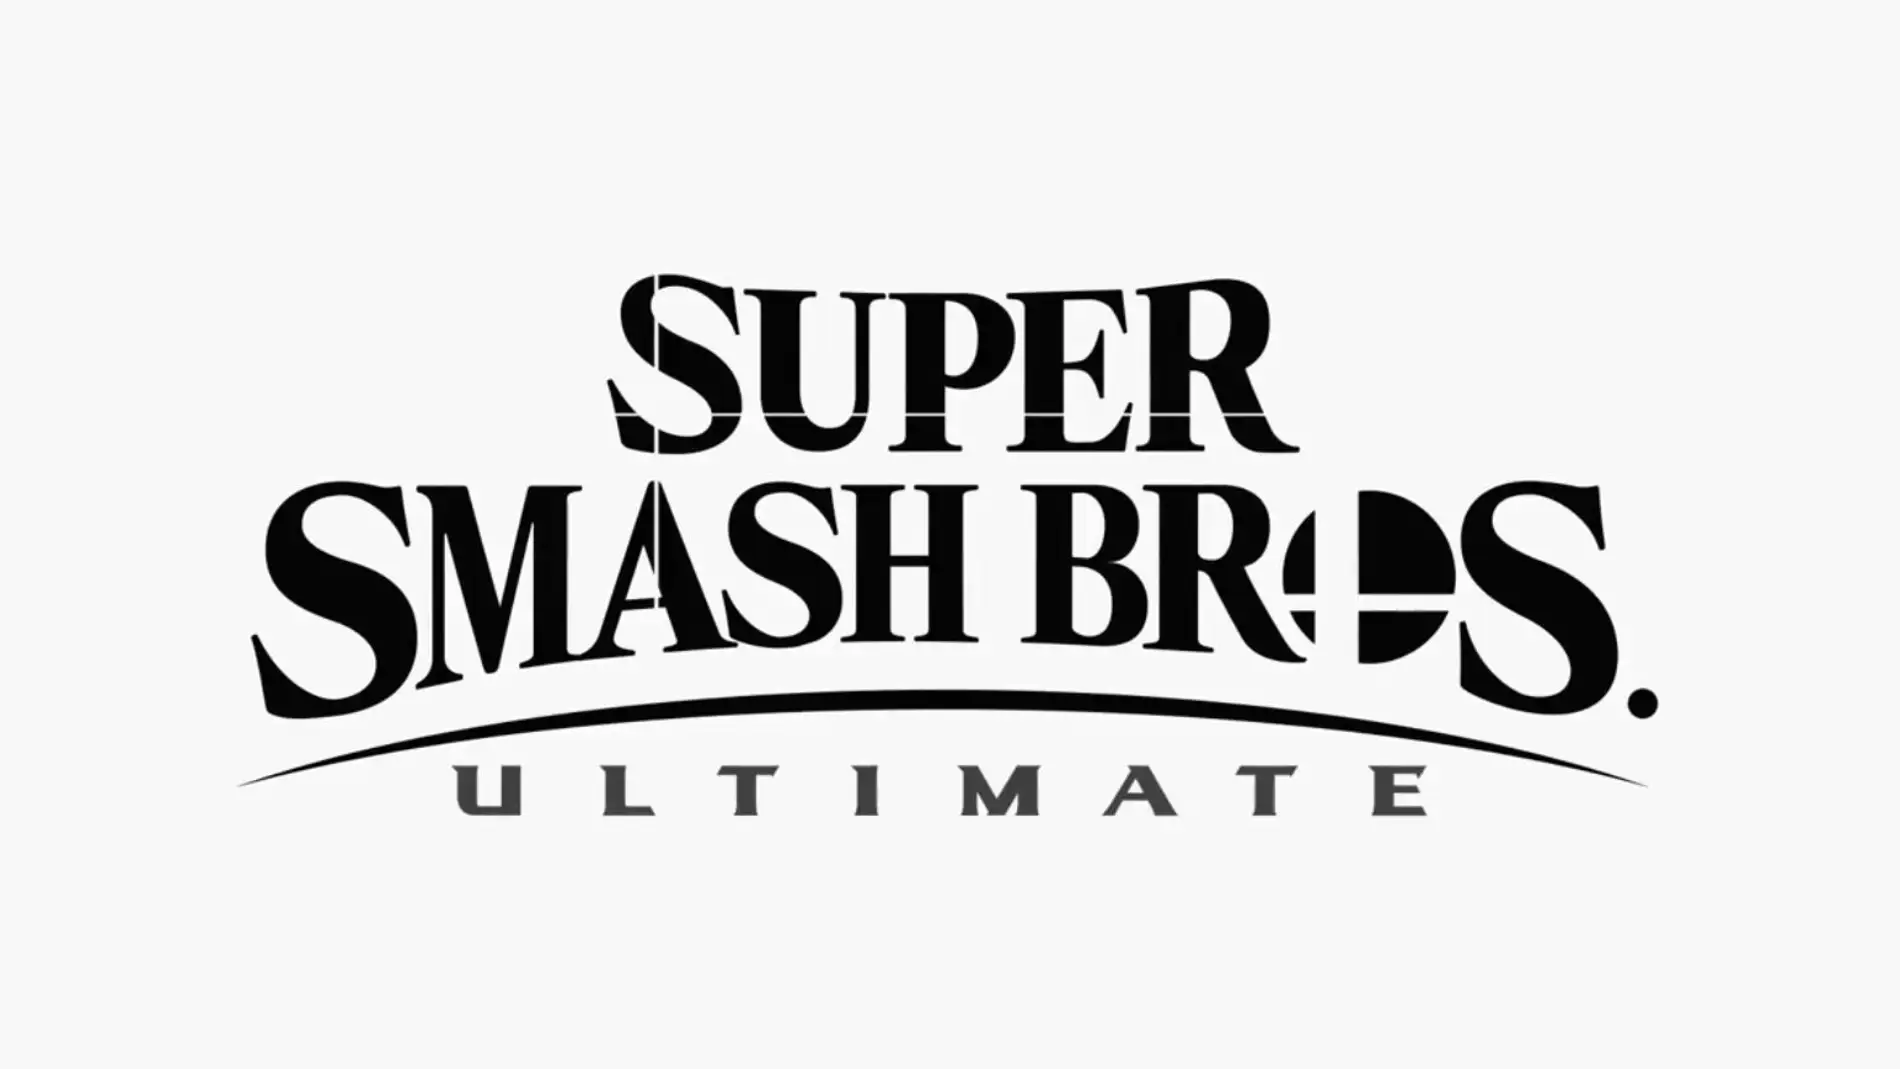 Super Smash Bros. Ultimate